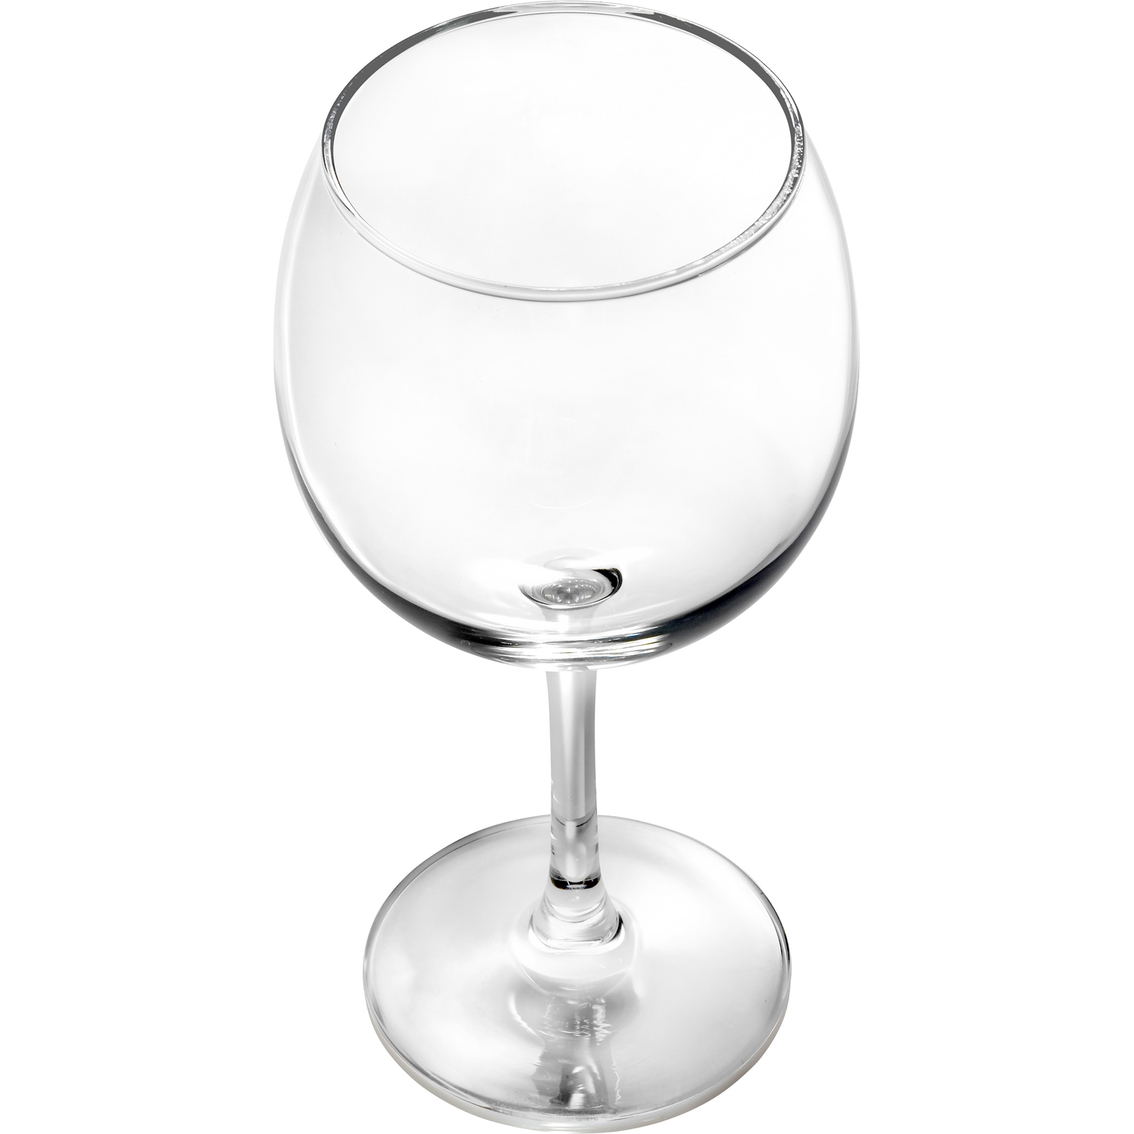 Arc International Alto By Luminarc 12 oz. Red Wine Glasses 4 pc. Set - Image 2 of 5